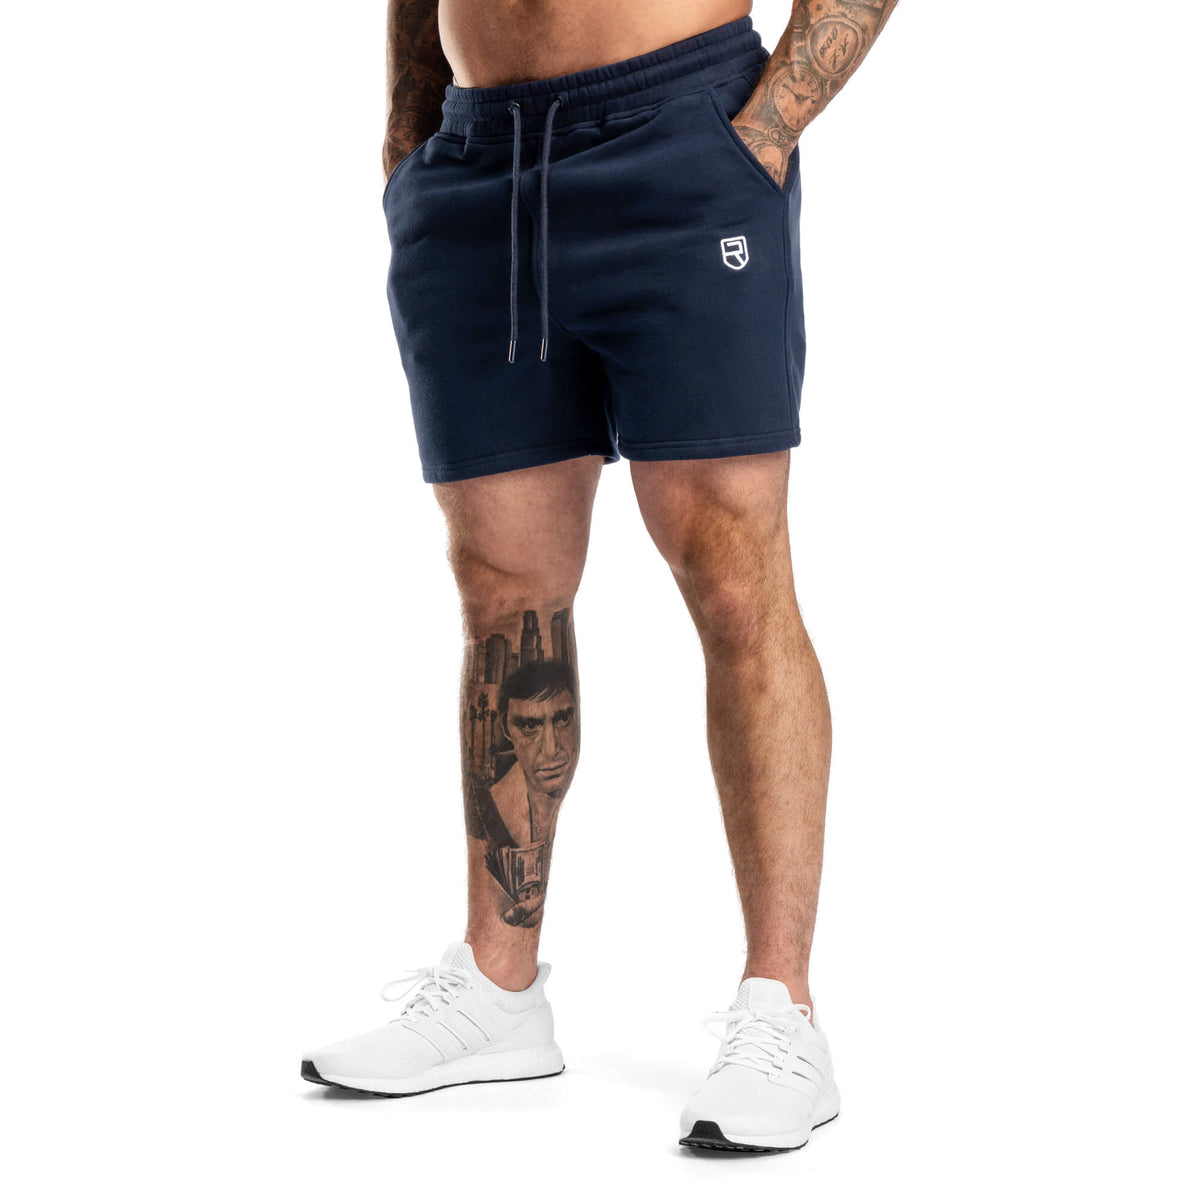 Comfy Shorts 5 2.0 - Navy - Rise Canada